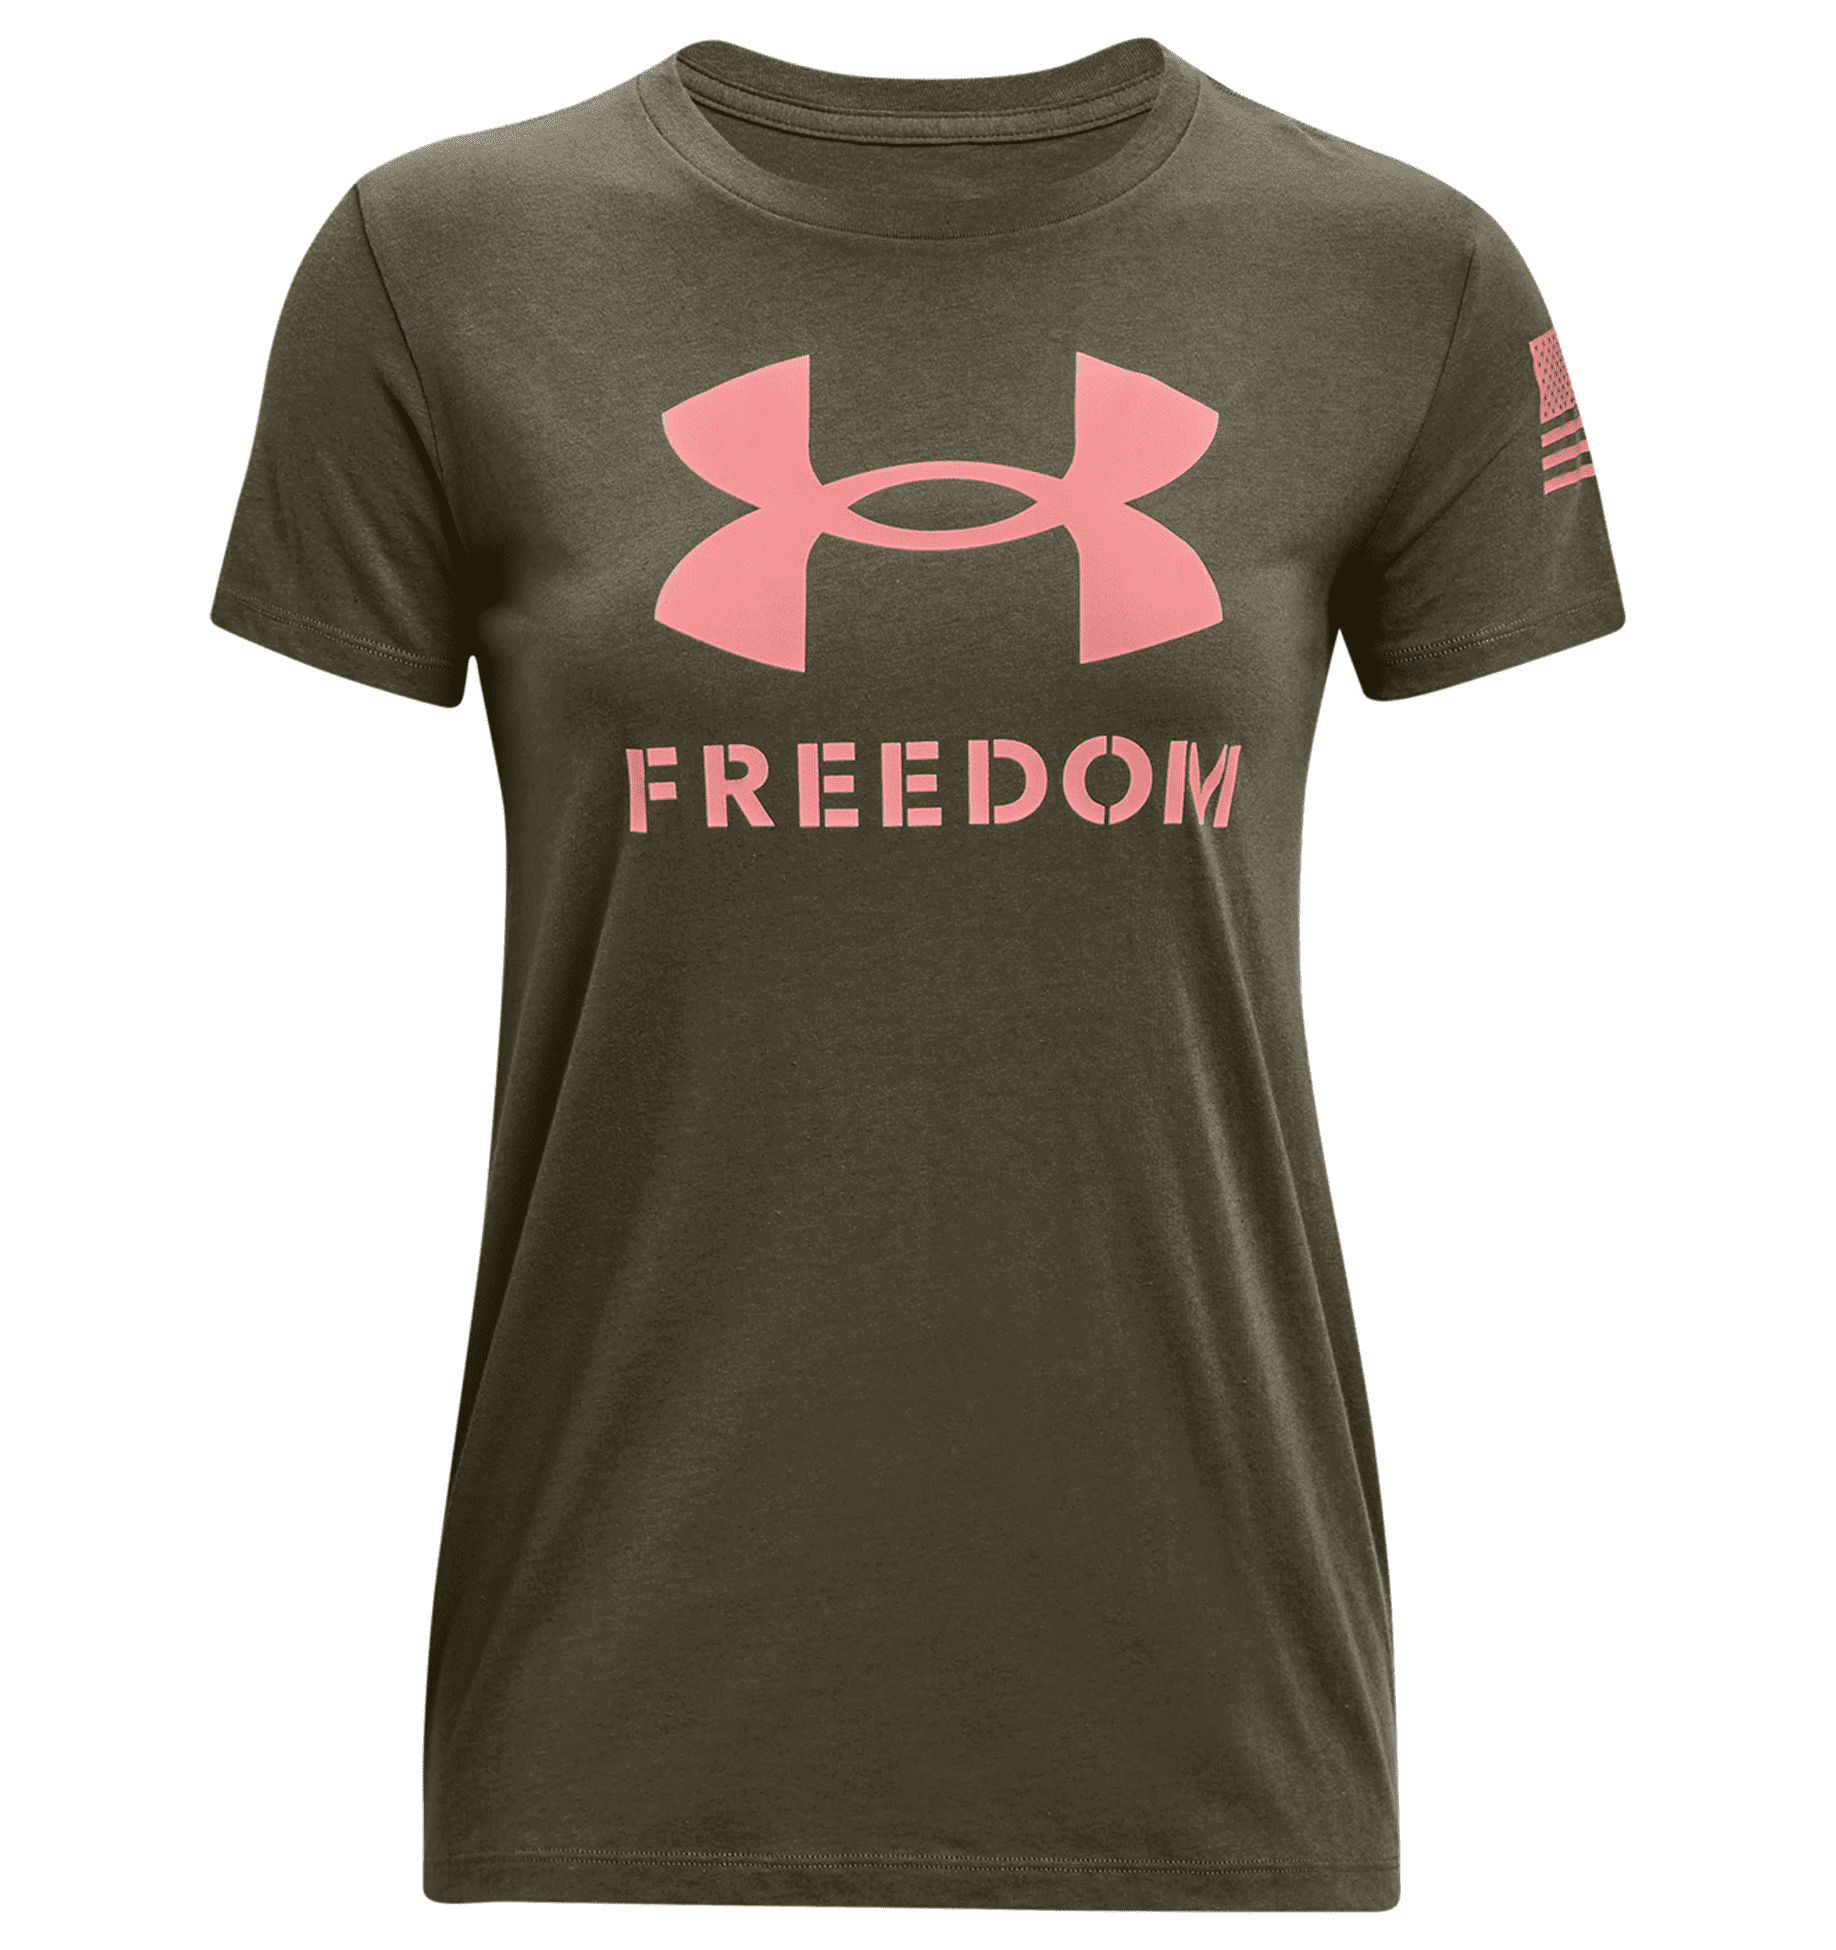 Under Armour Women's UA Freedom Logo T-Shirt 1370815 - Marine OD Green/Pink, 2XL